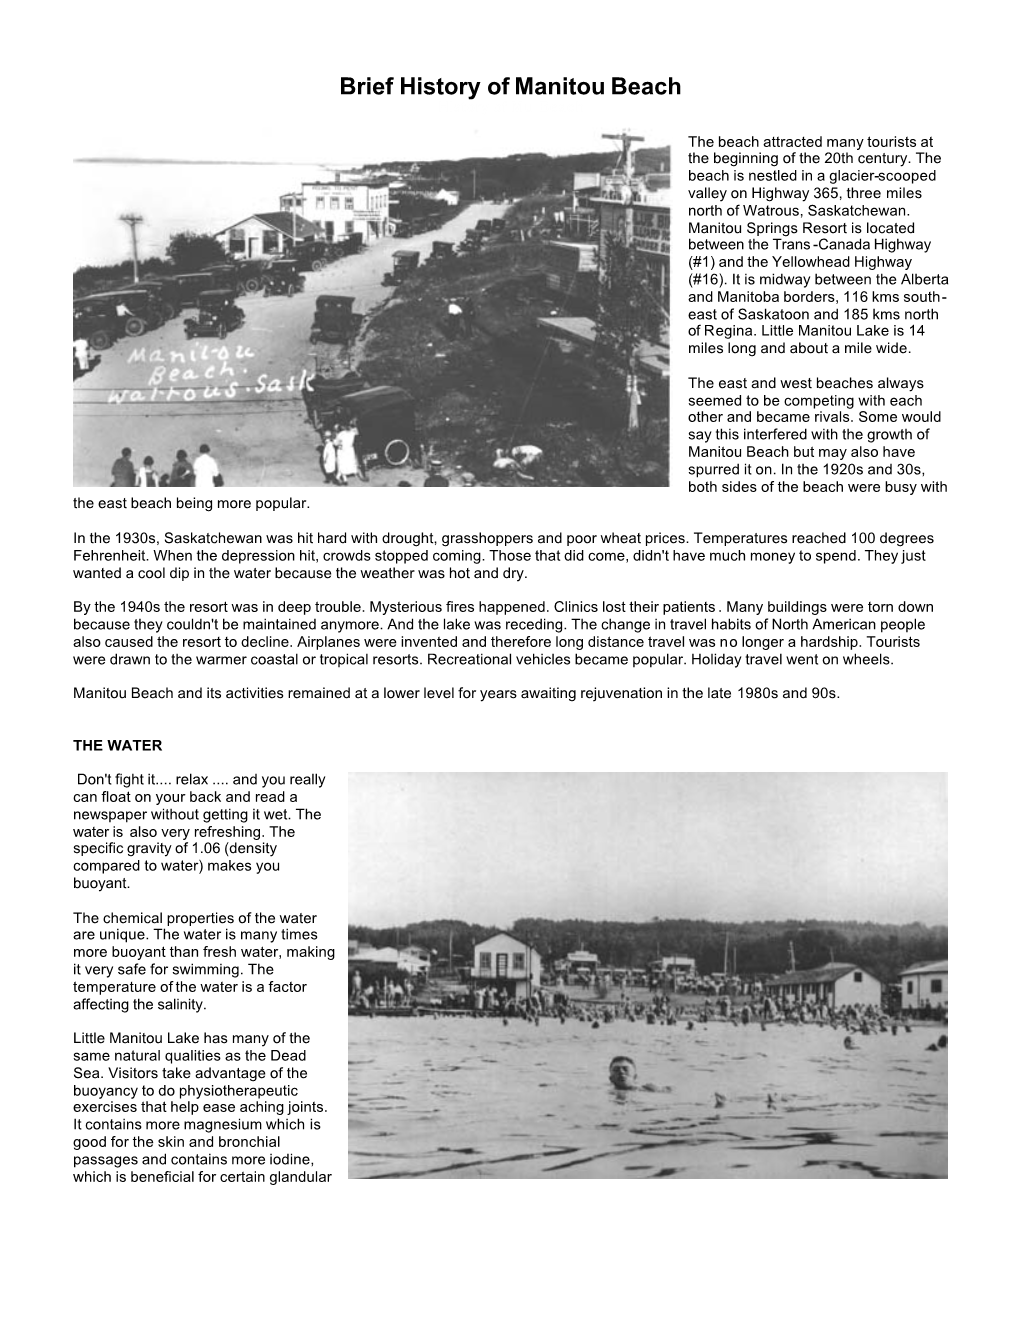 Brief History of Manitou Beach History of Mu Beach